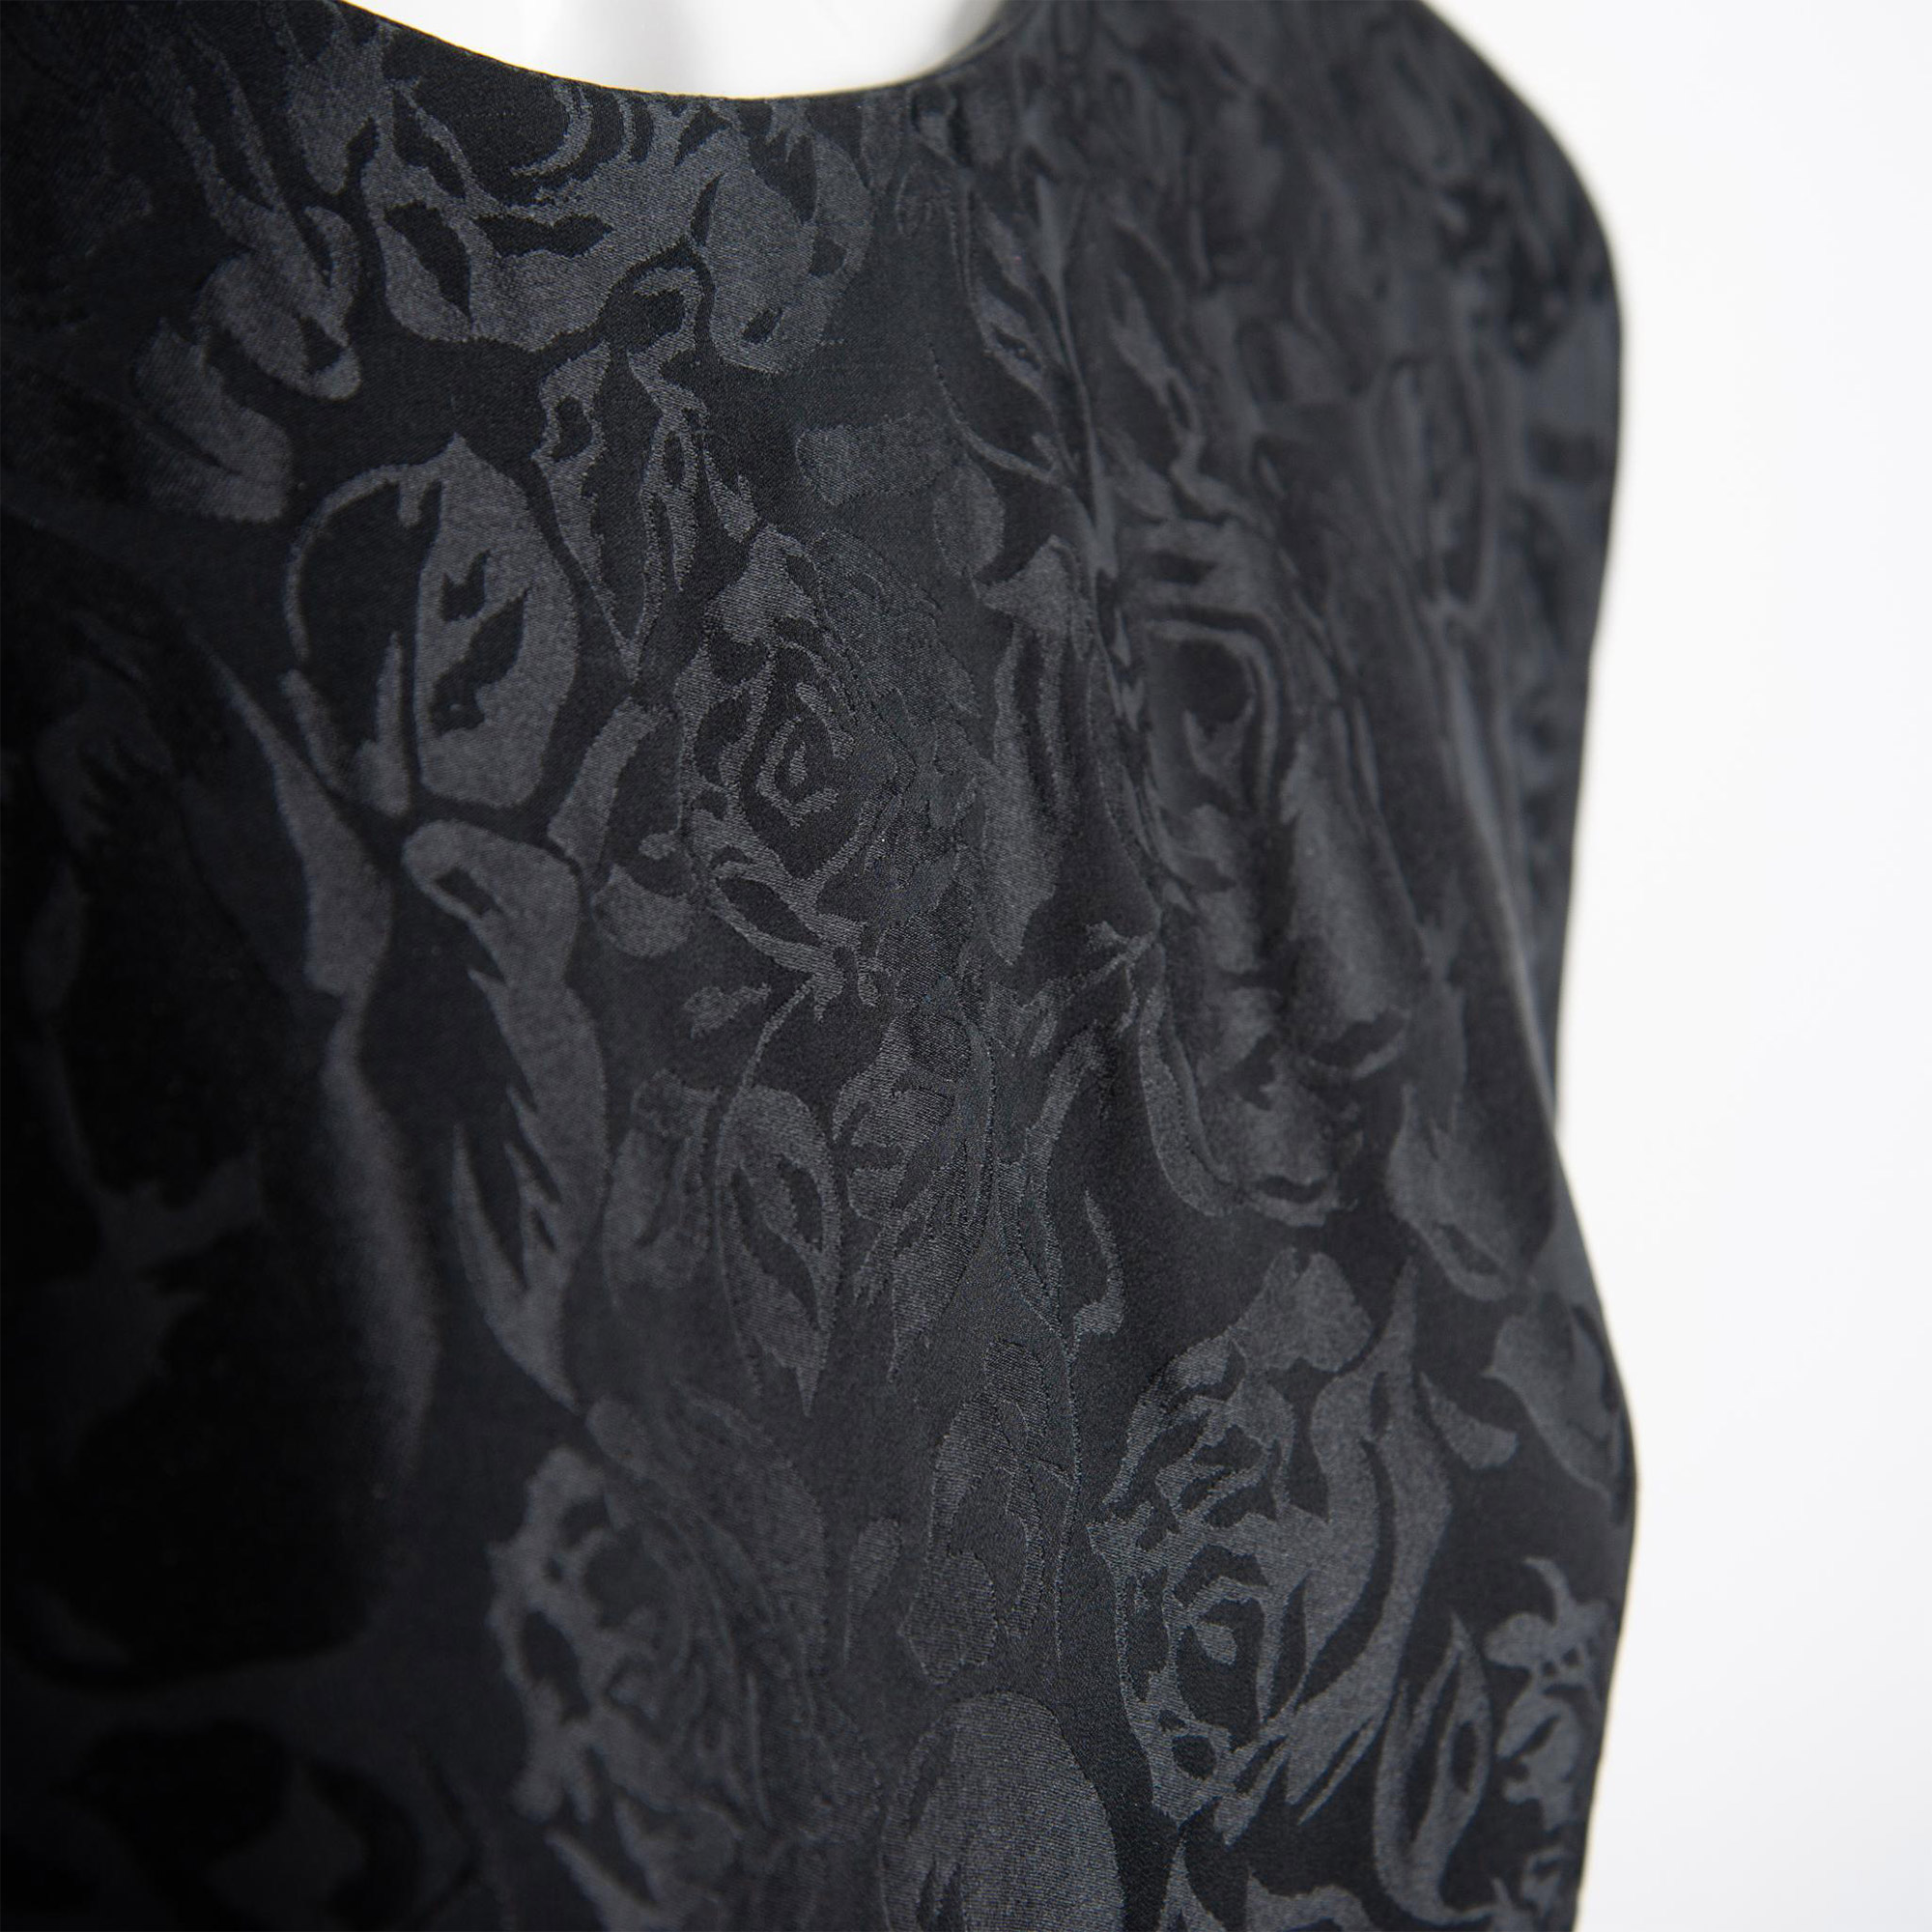 Vintage St. Gillian Black Silk Ruffled Dress, Size 10 - Image 4 of 9